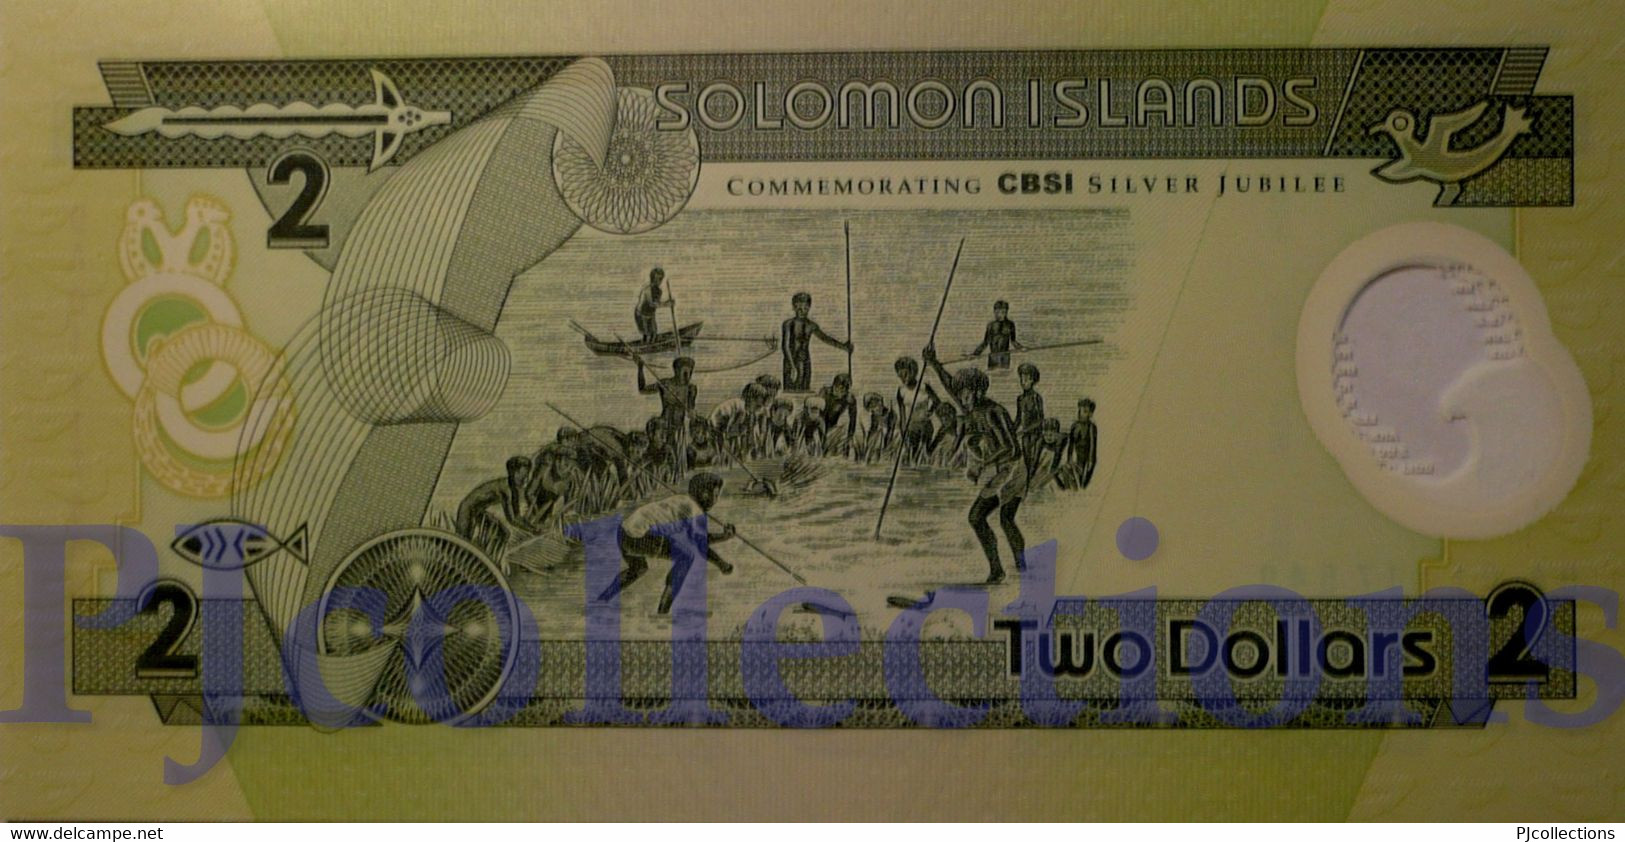 SOLOMON ISLANDS 2 DOLLARS 2001 PICK 23 POLYMER UNC - Solomon Islands